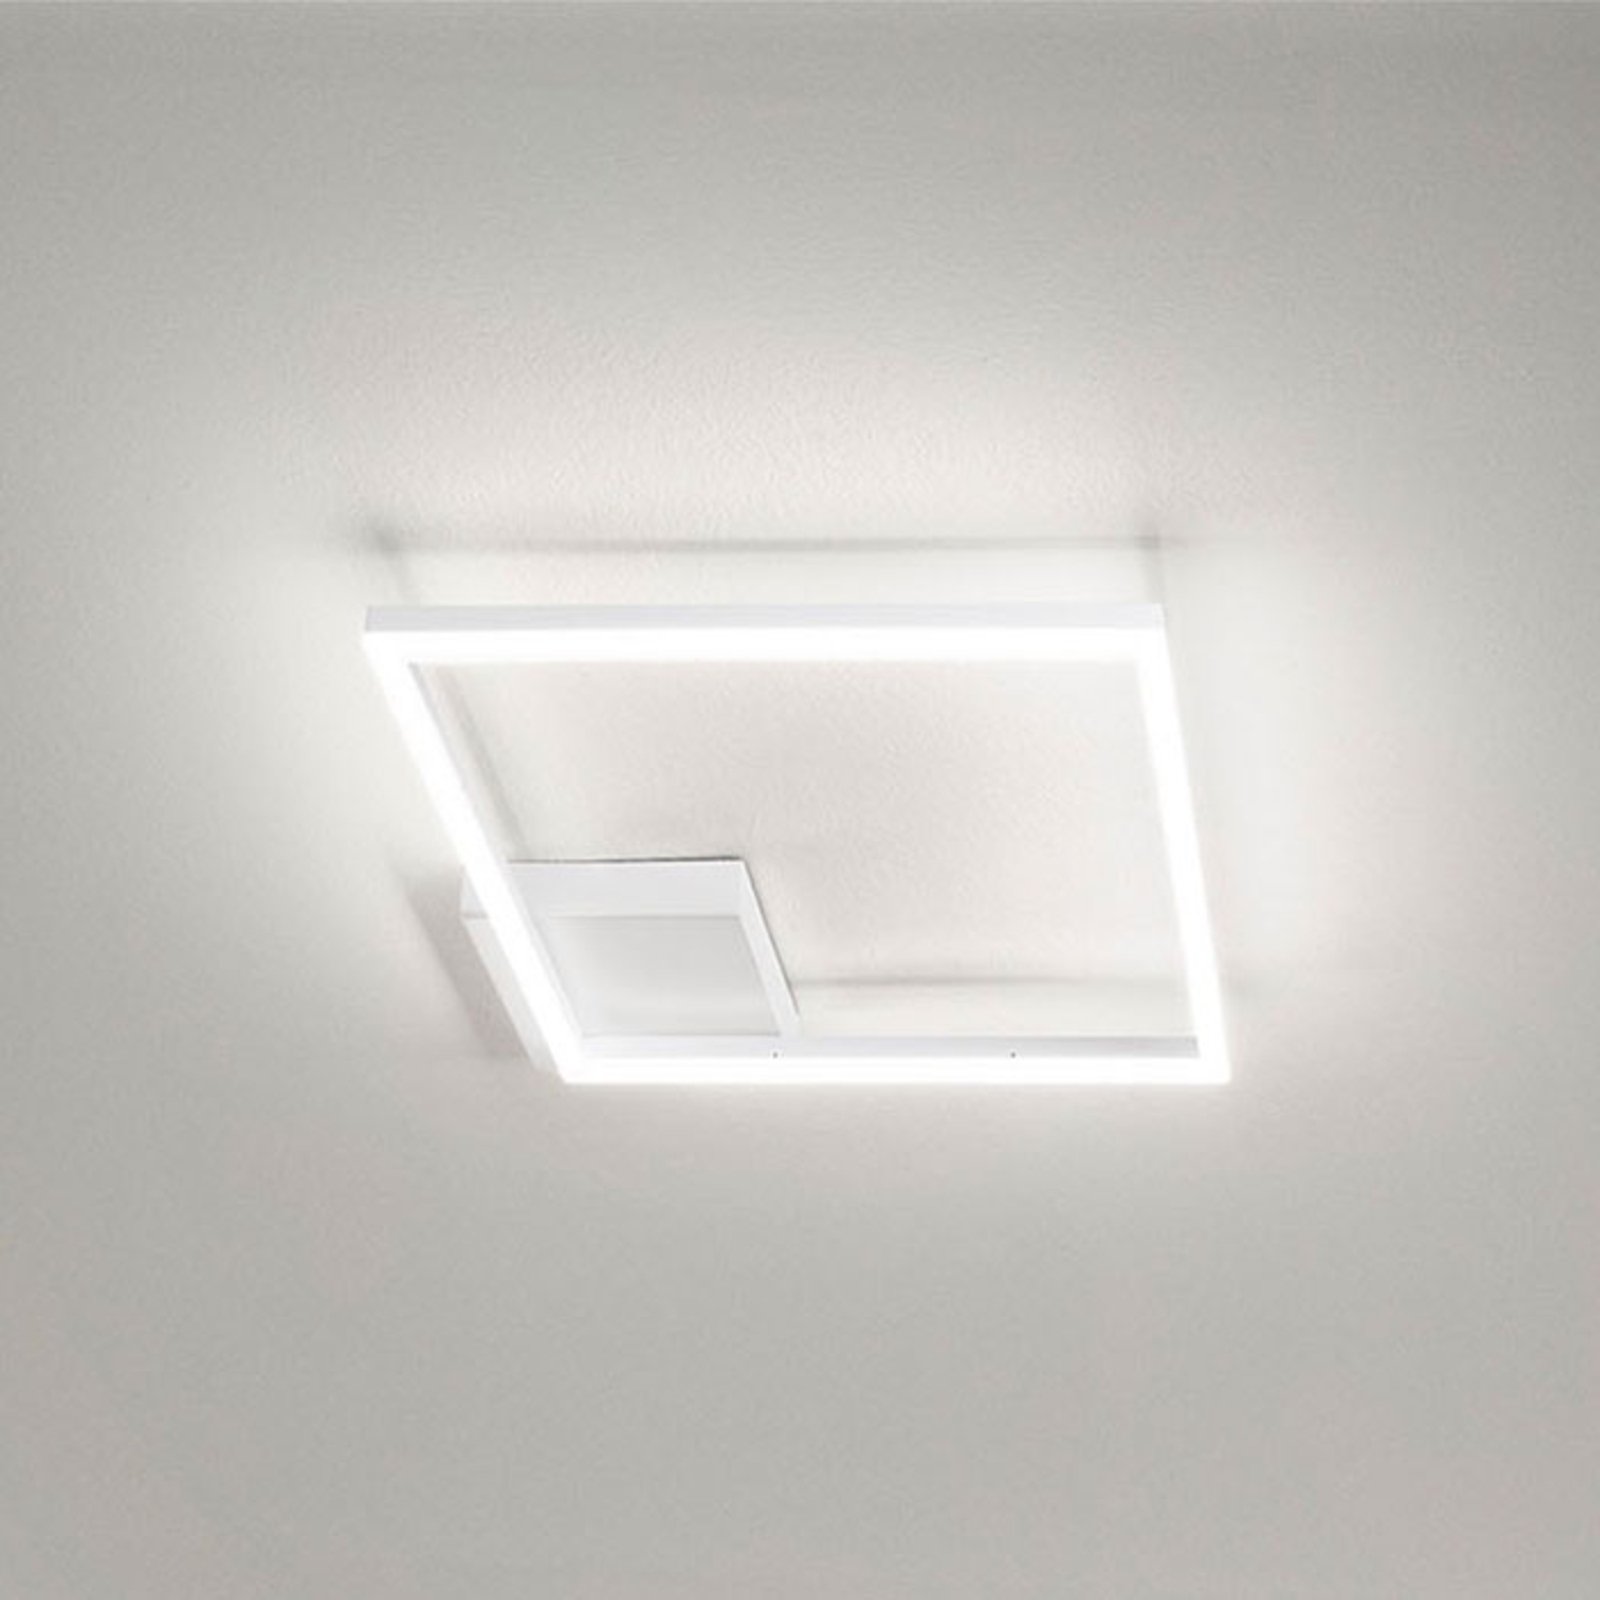 LED plafondlamp Bard, 27x27cm, wit